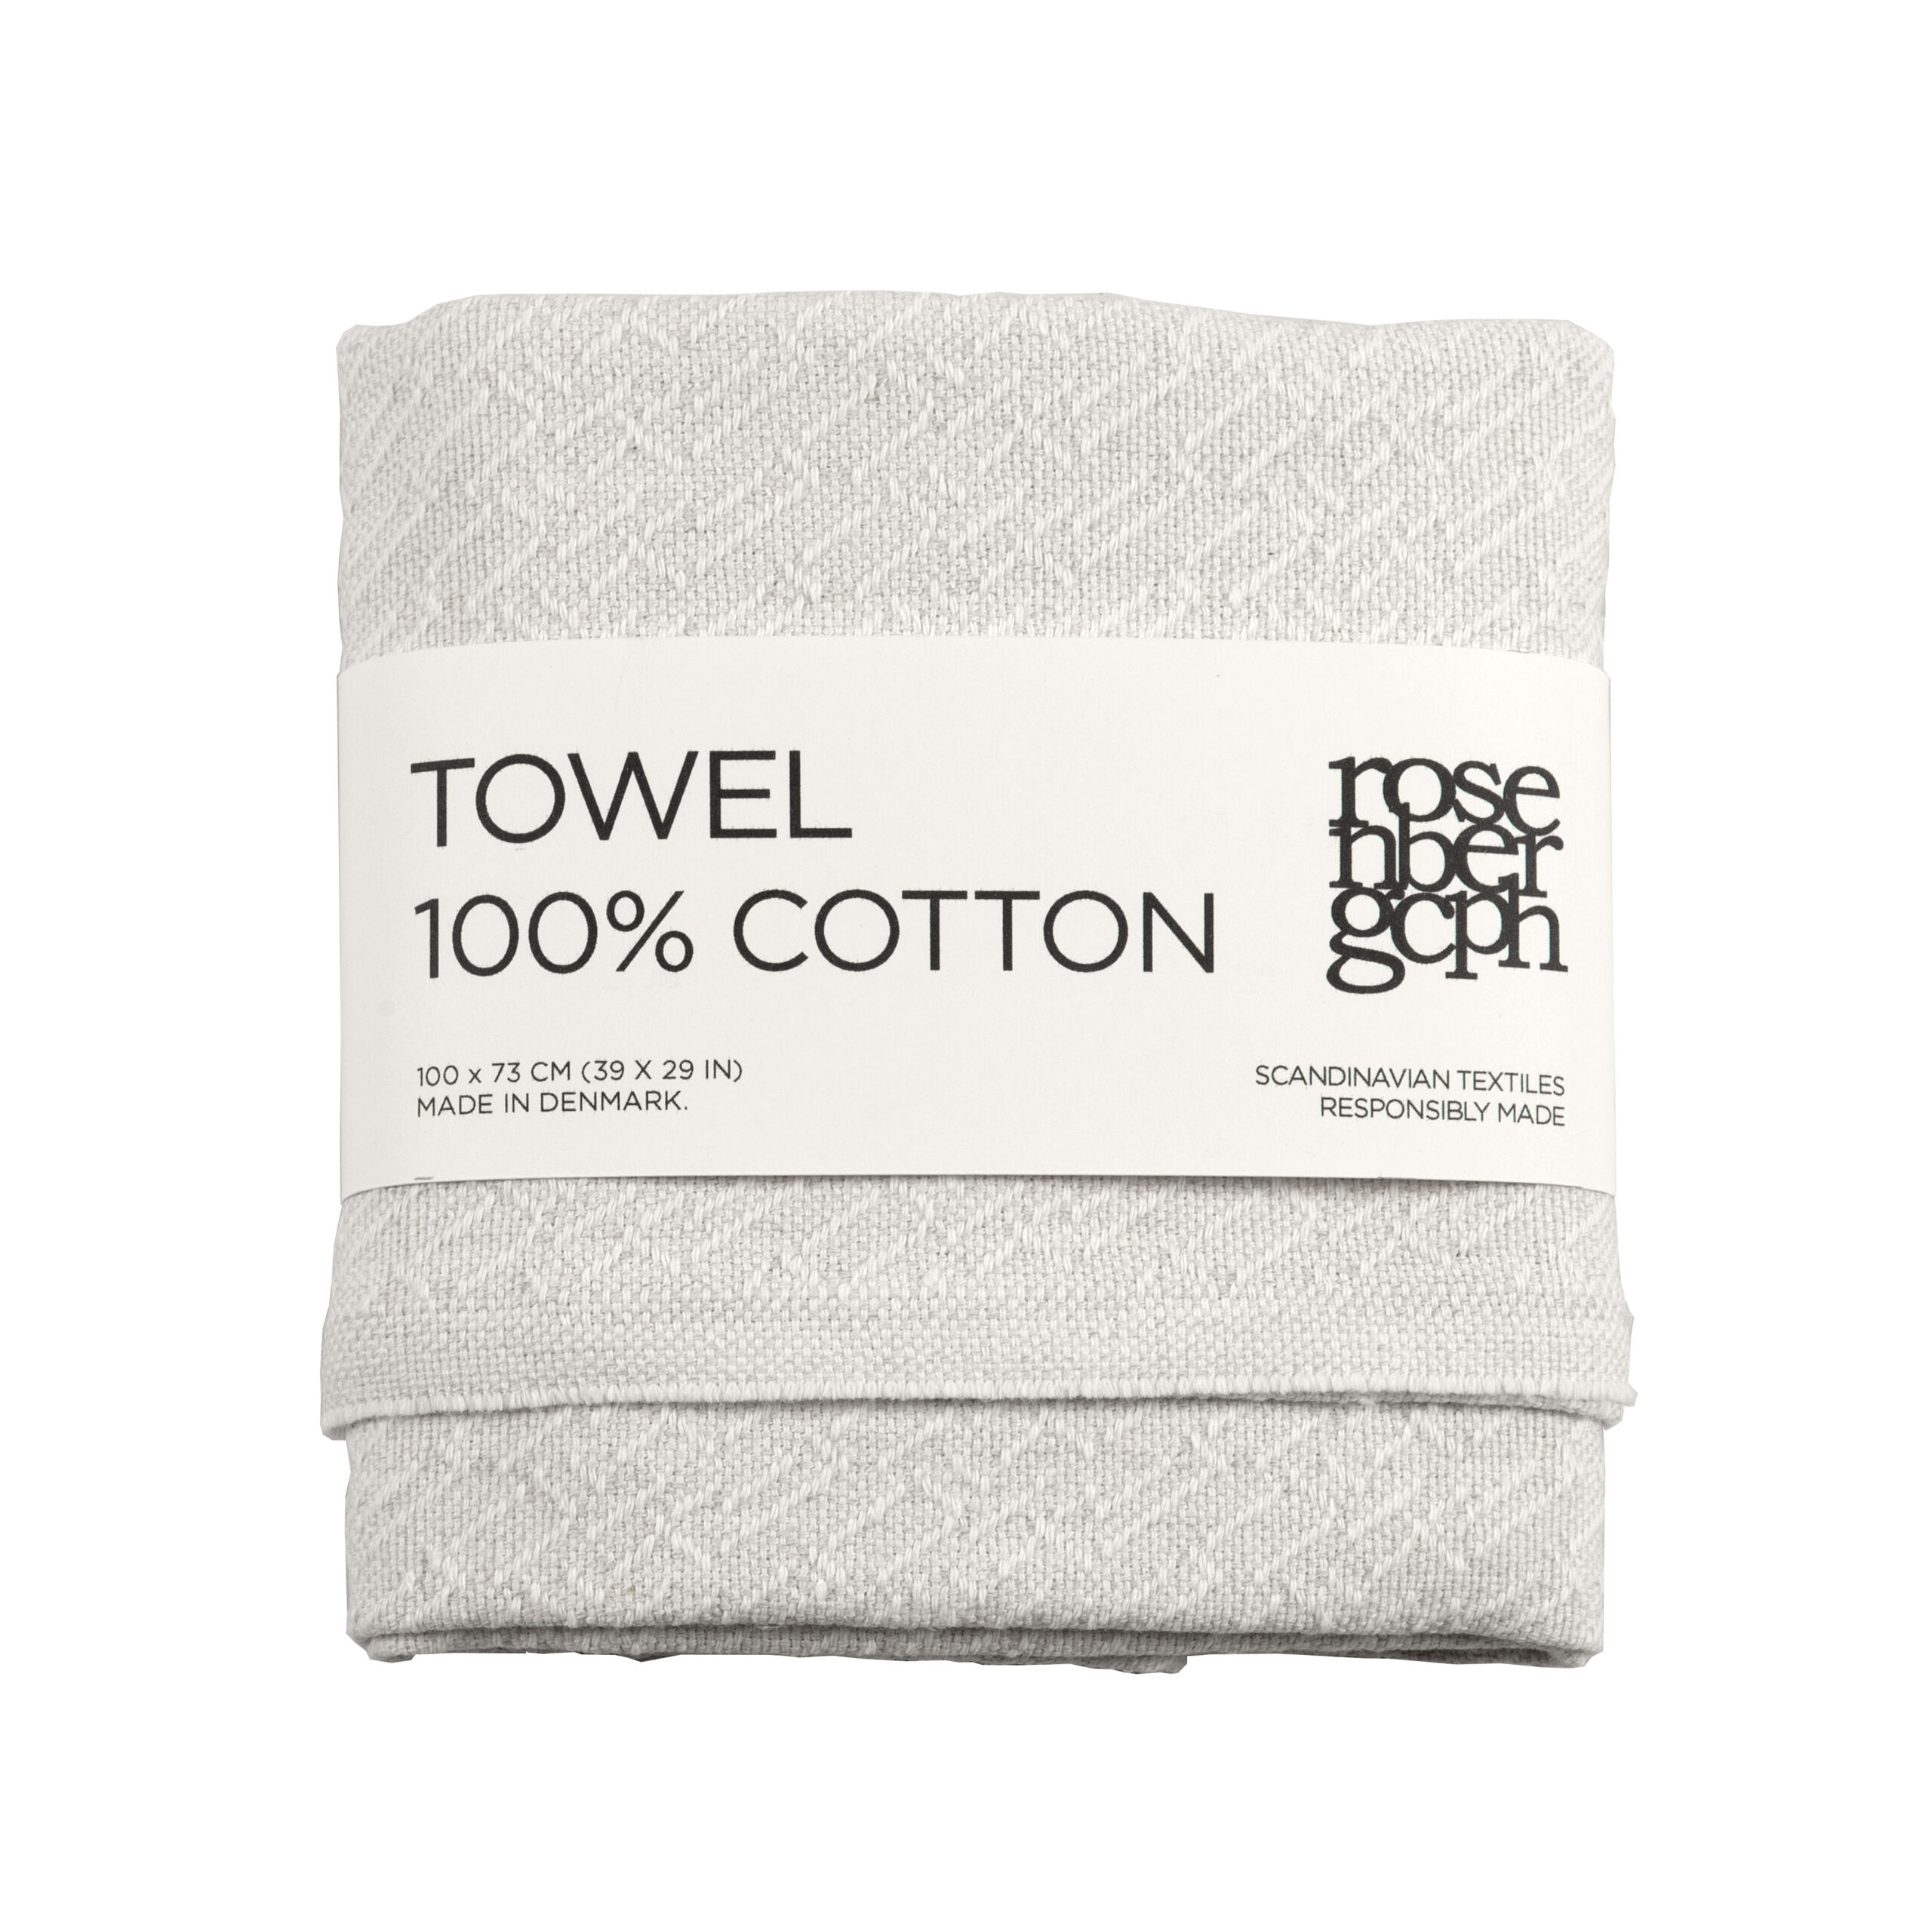 Towel, Mesh, 100% cotton, by RosenbergCph